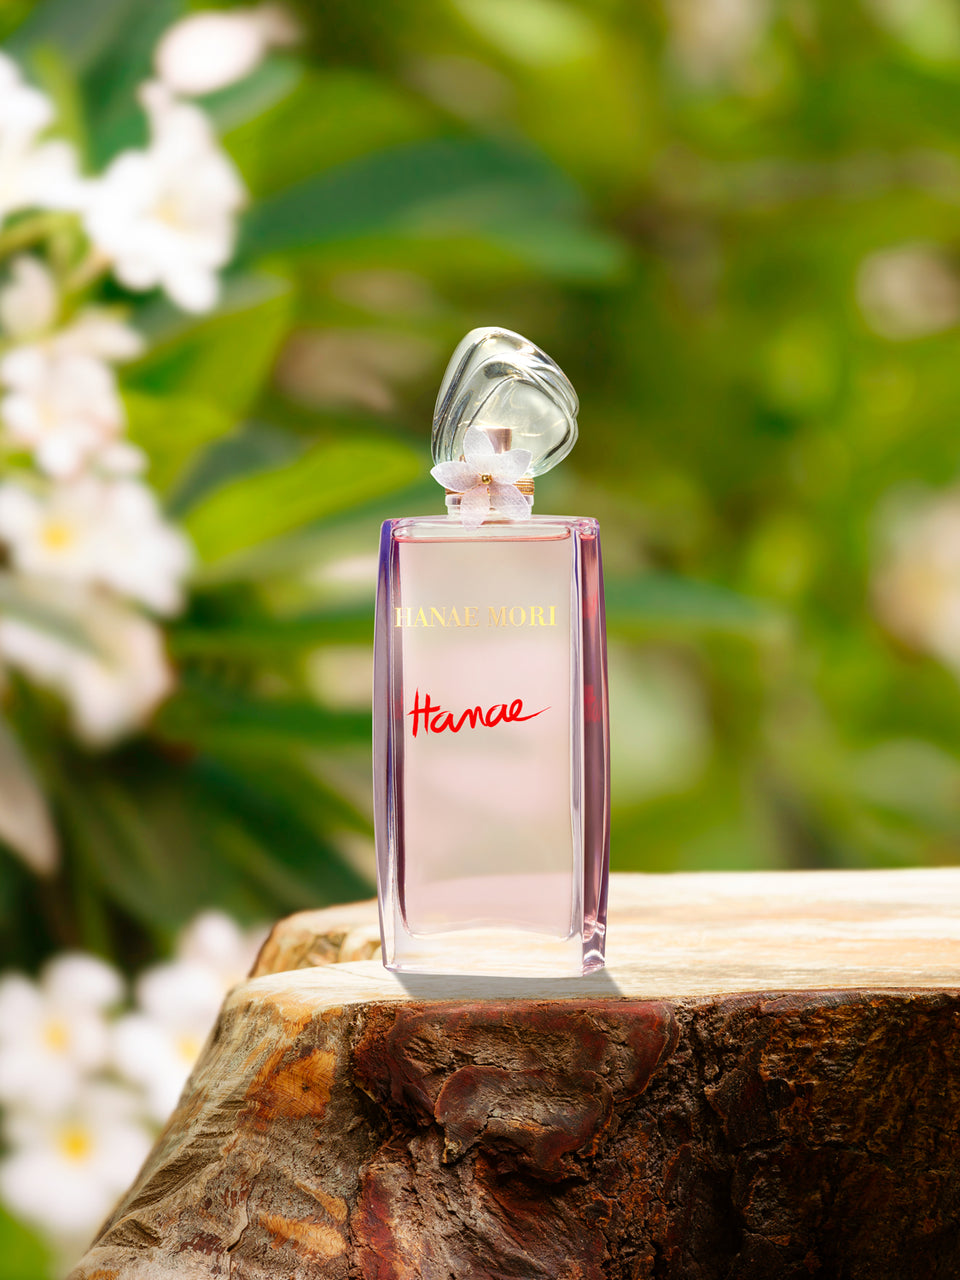 Hanae the sparkling fragrance